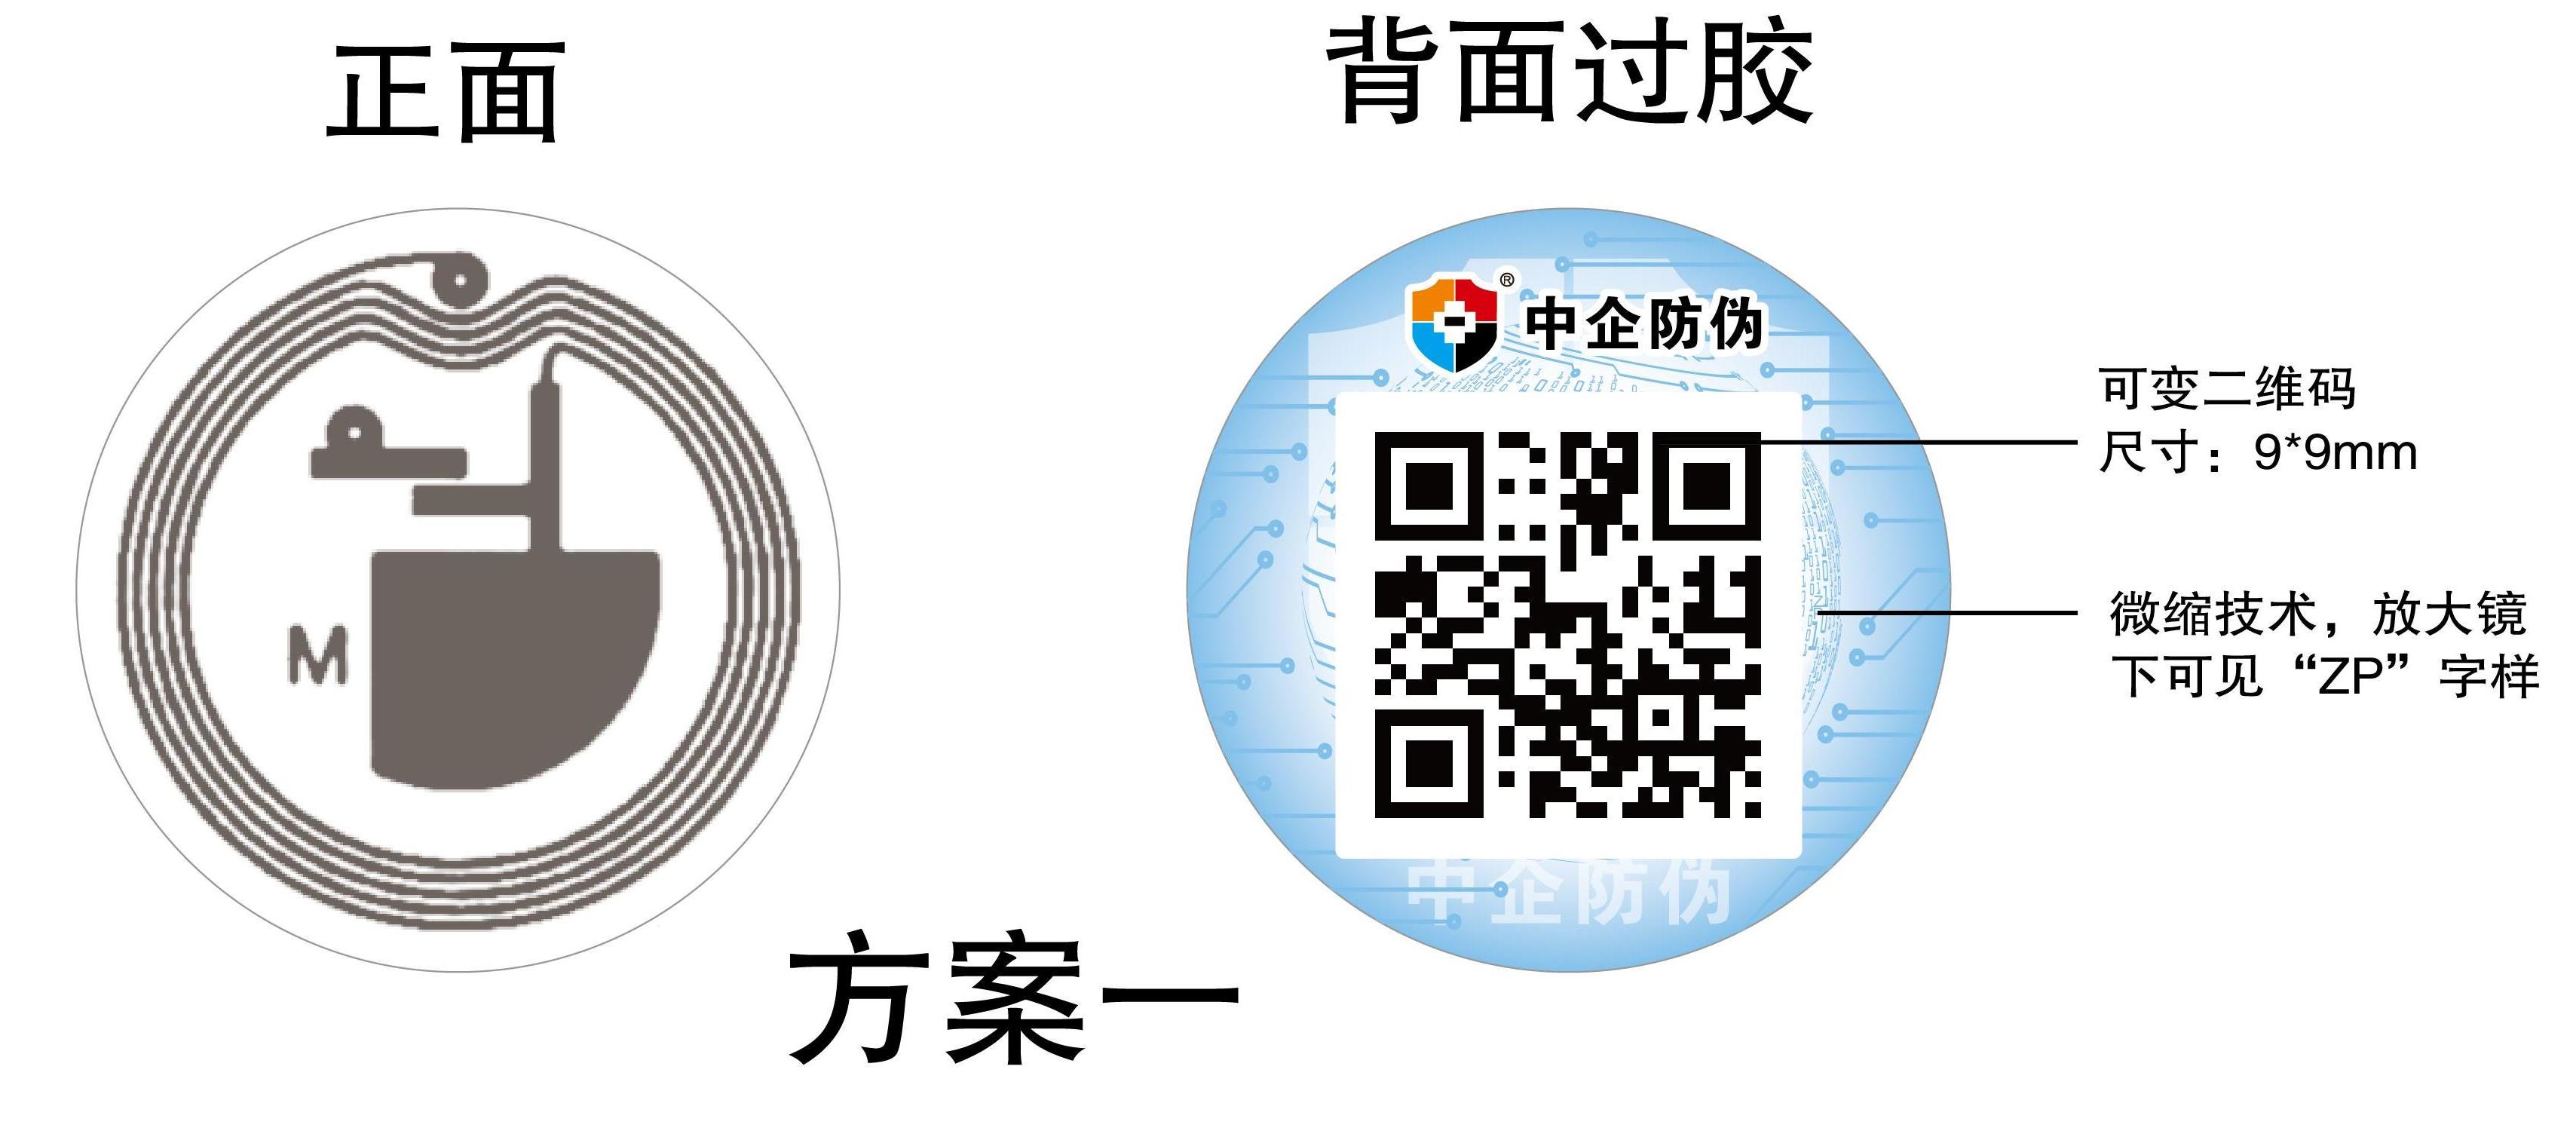 NFC电子标签设计方案20220606-01(1).jpg